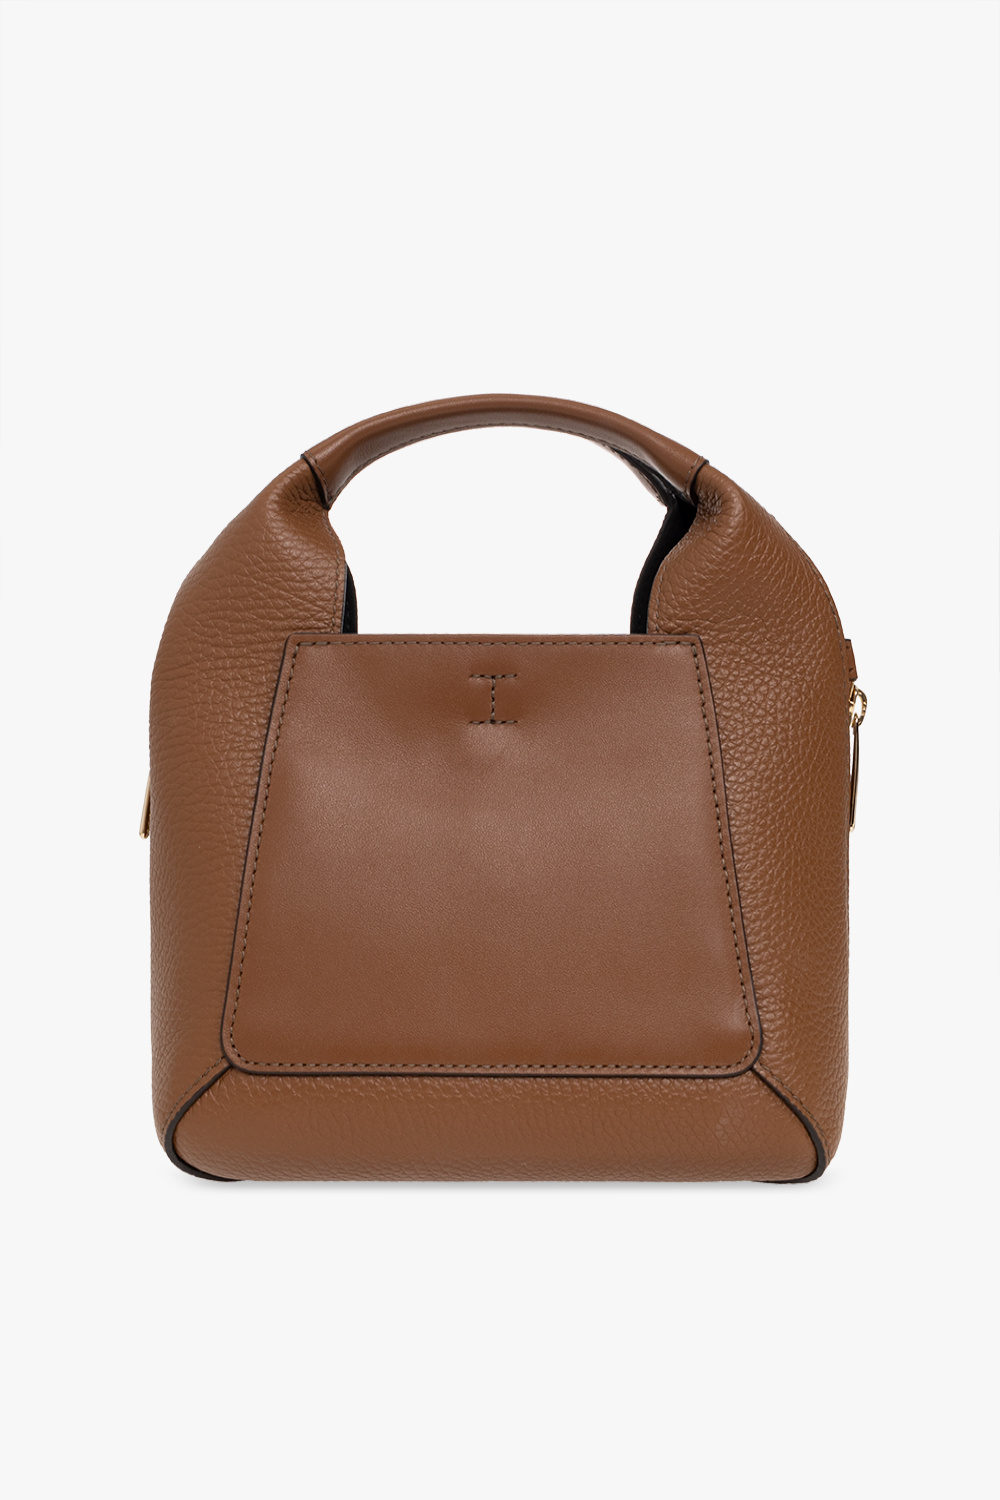 Biosa Women's Mini Shoulder Bag